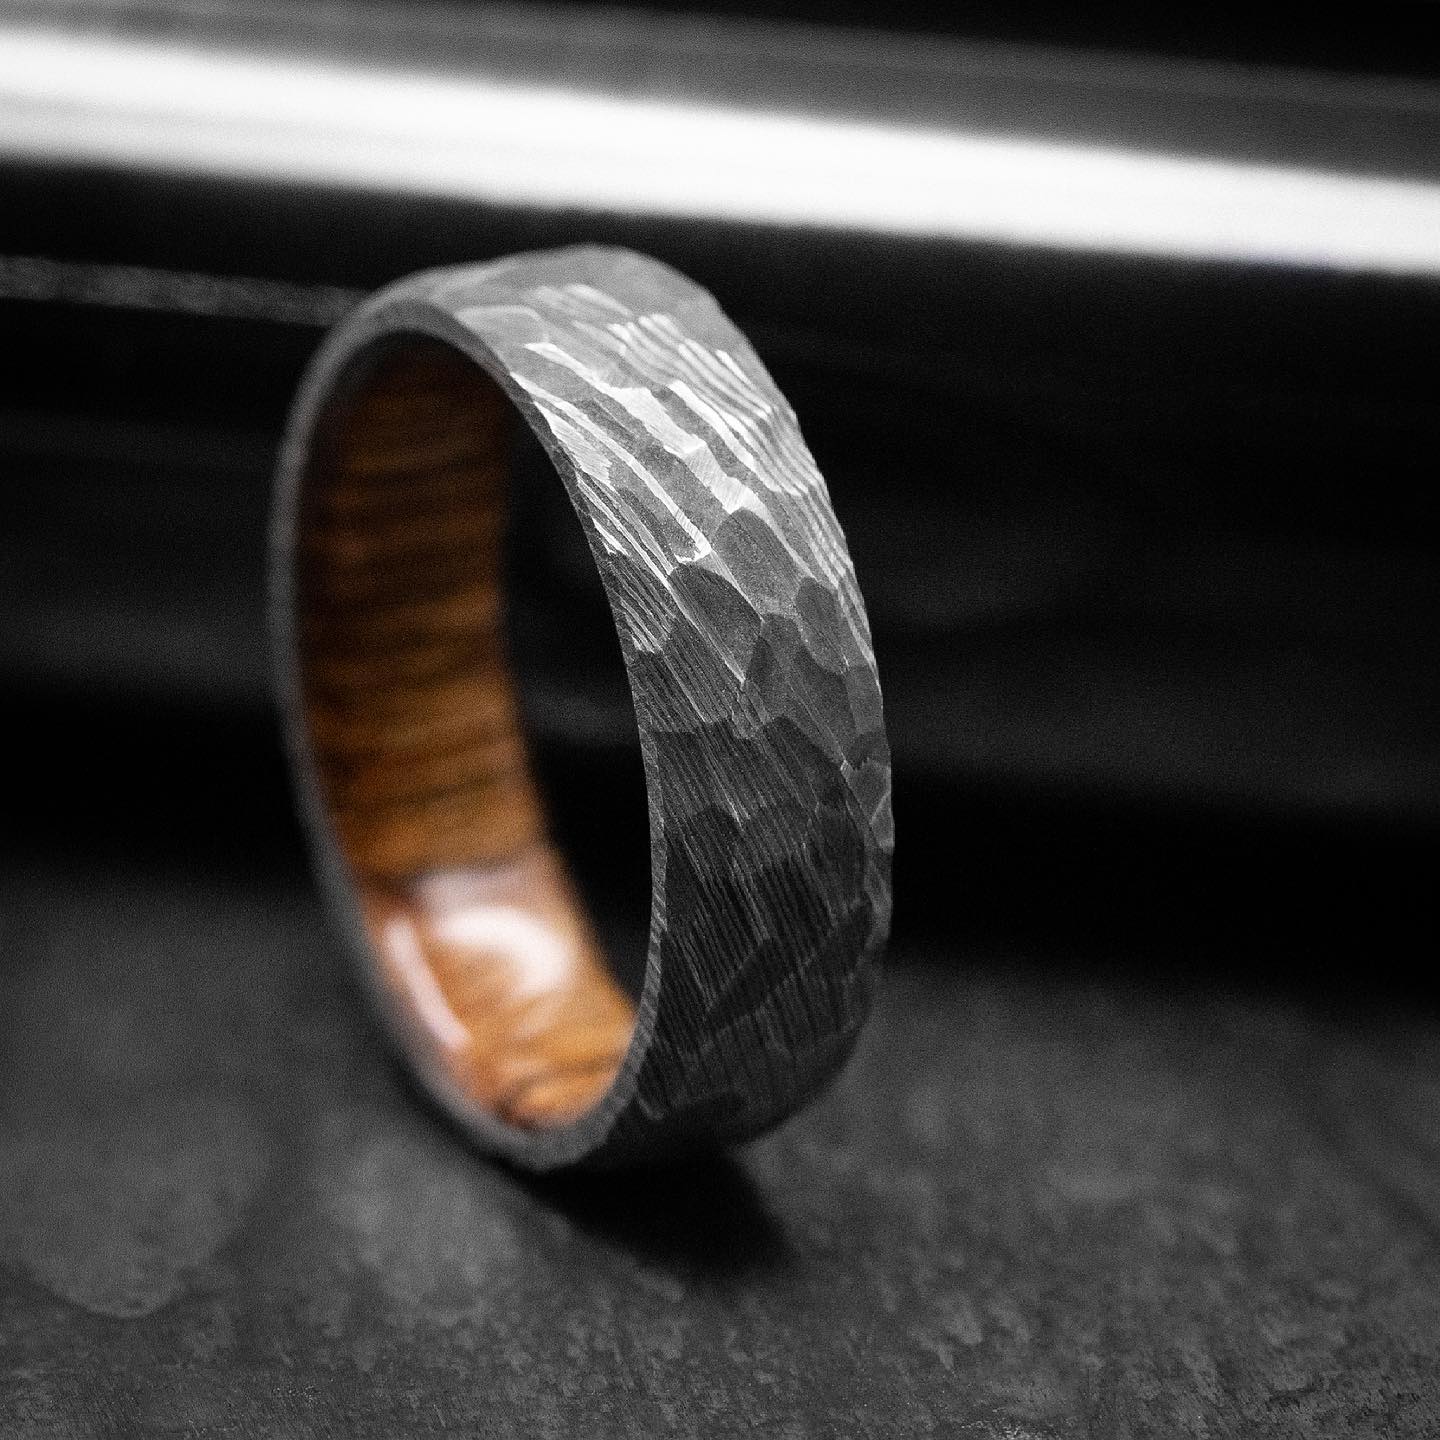 Custom Men's Rings, Rings from Unique Material